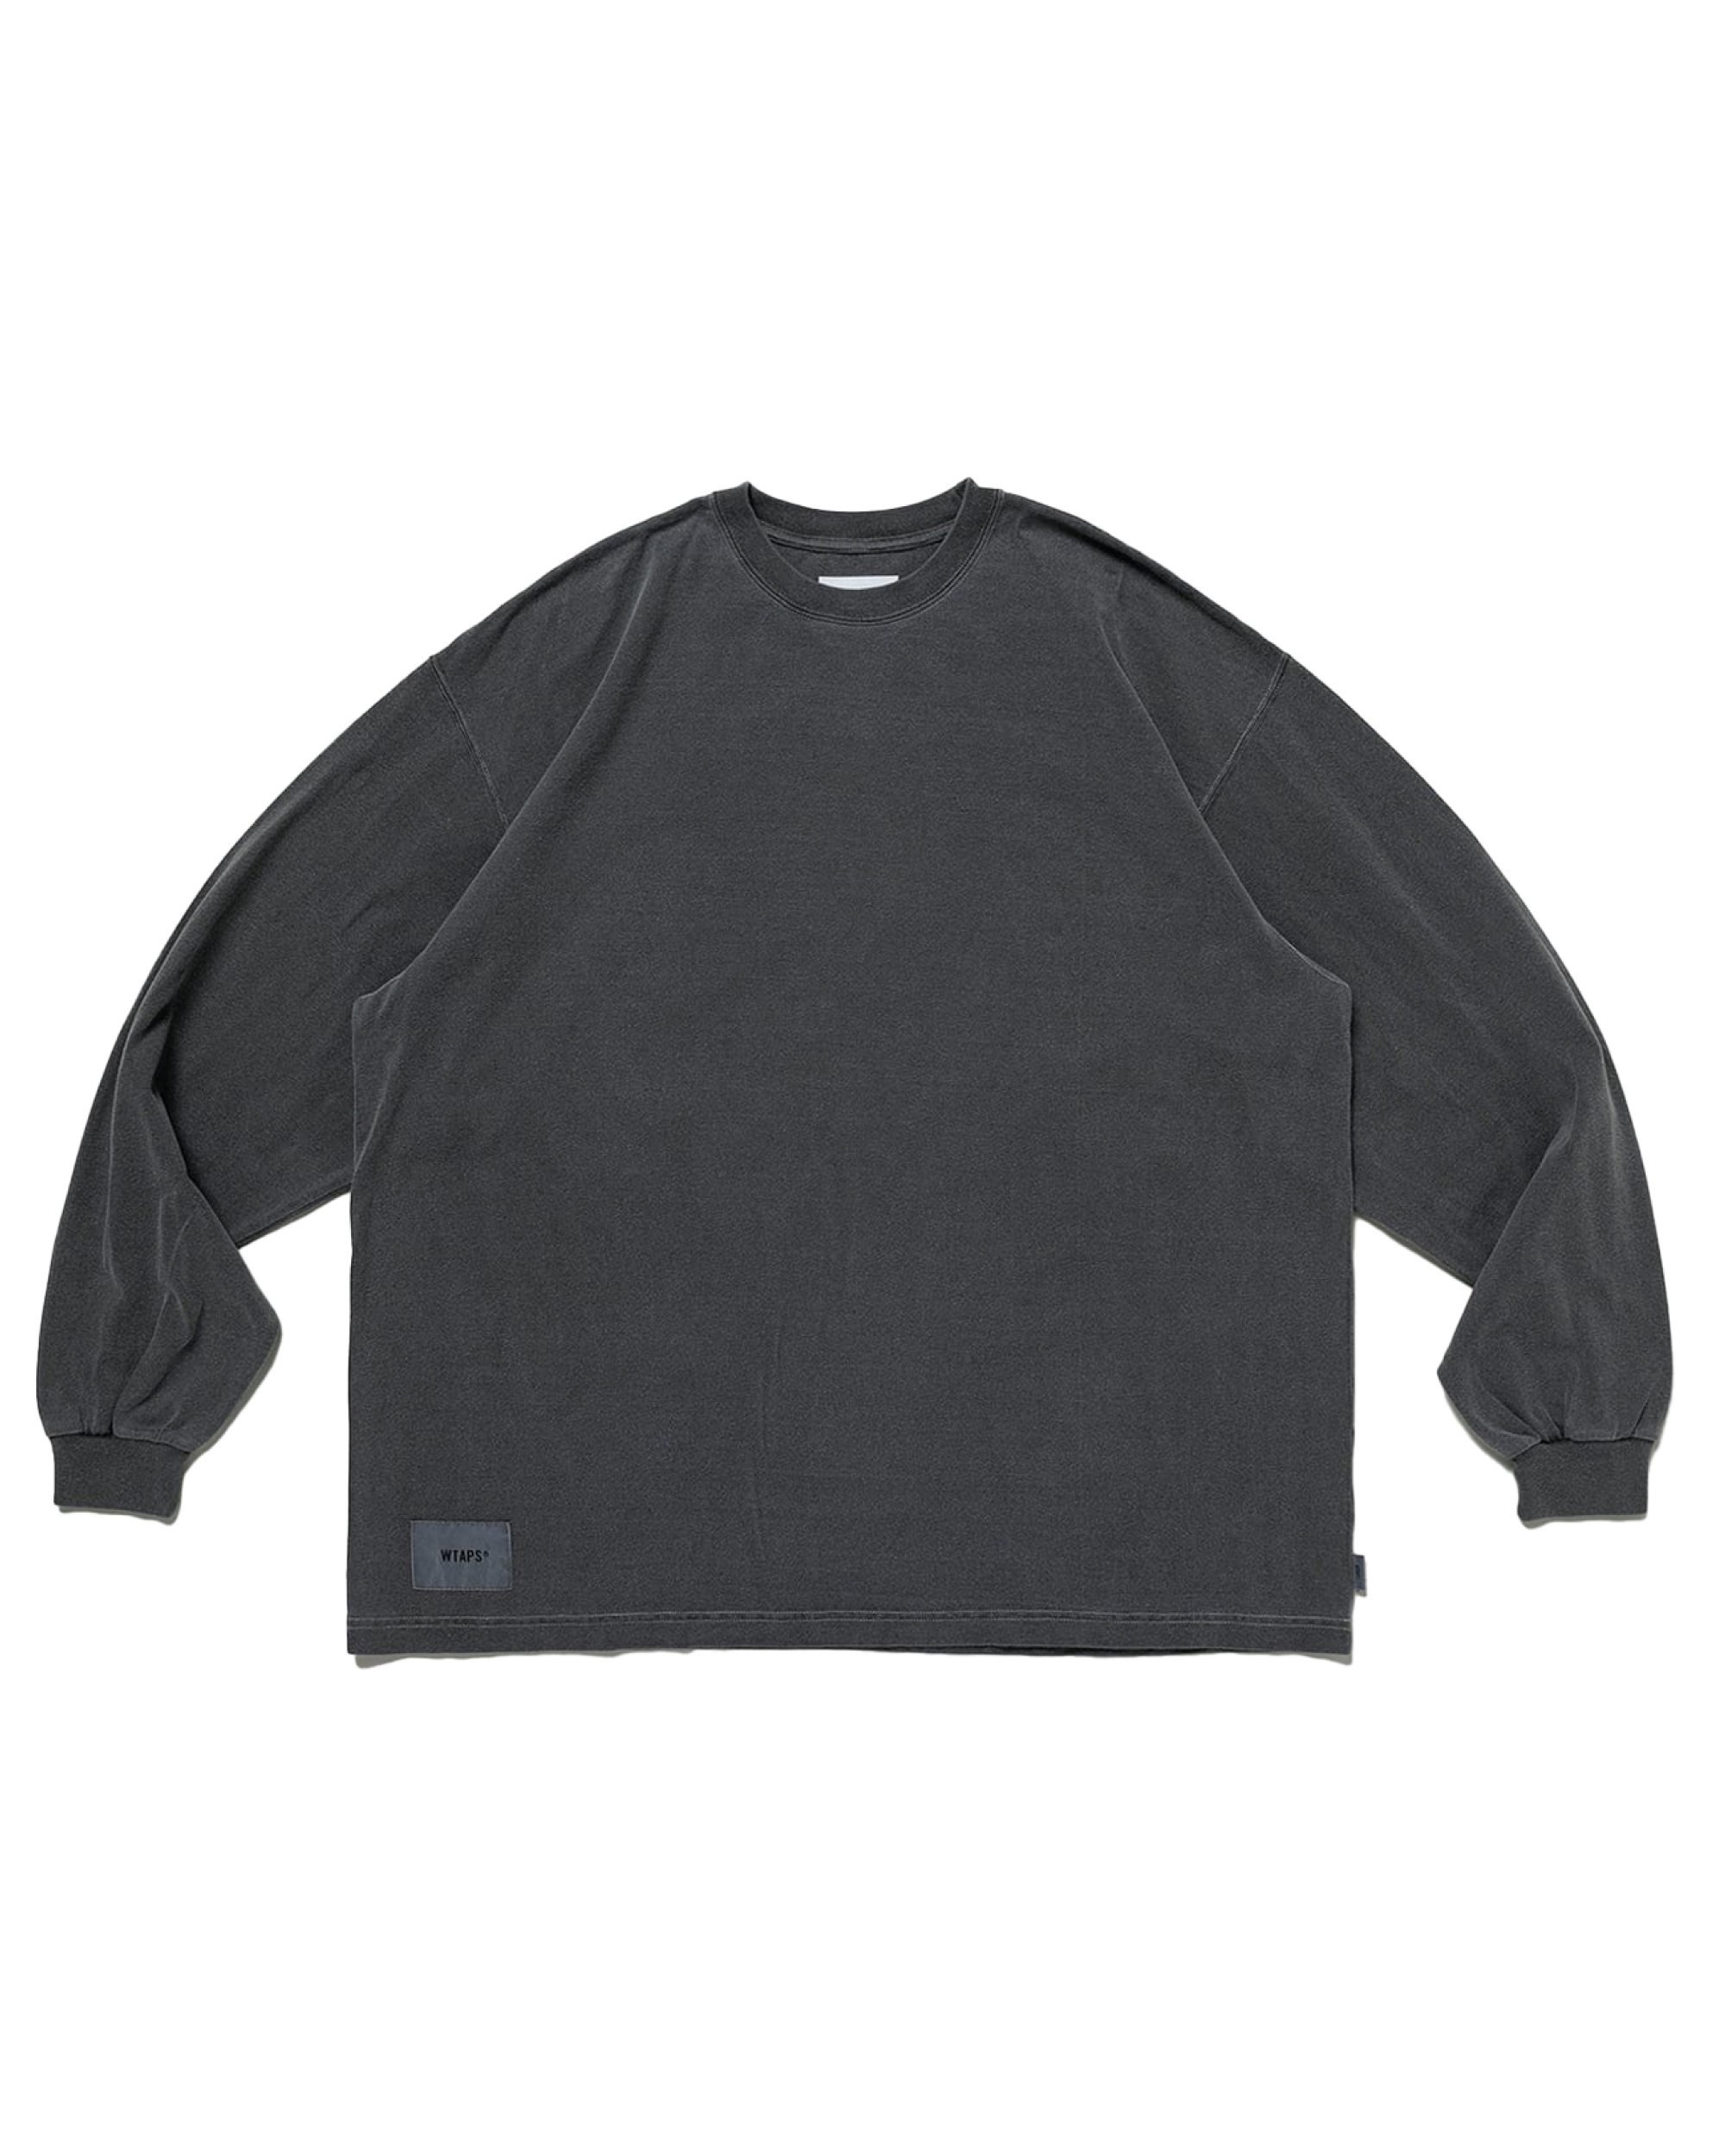 AII 02 / LS / Cotton Sign sweatshirt